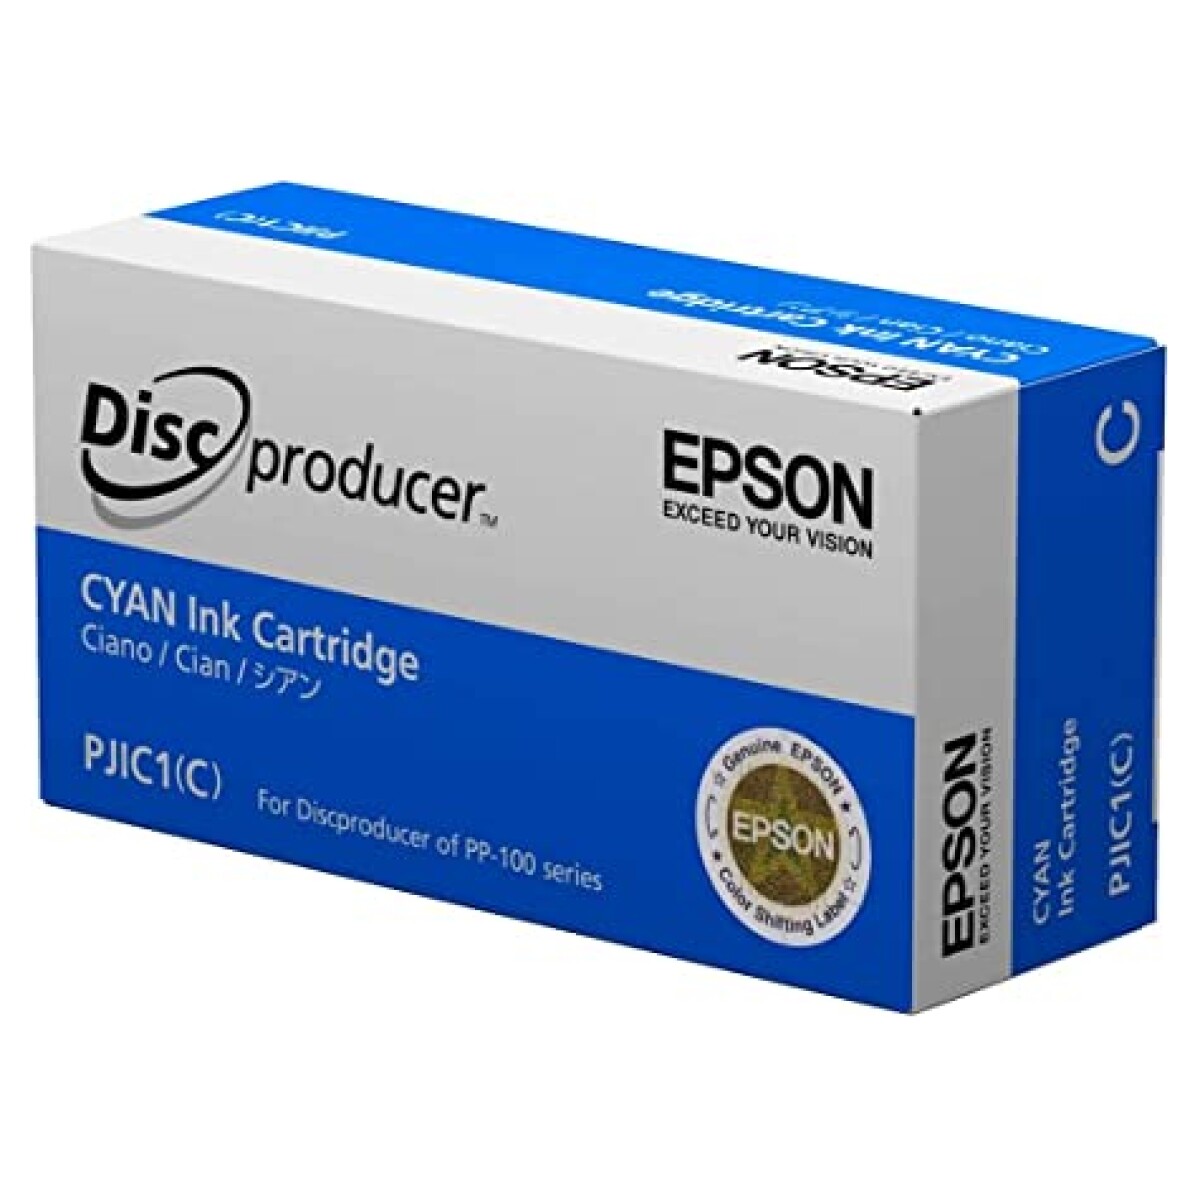 Epson Discproducer Ink Cartridge, Cyan